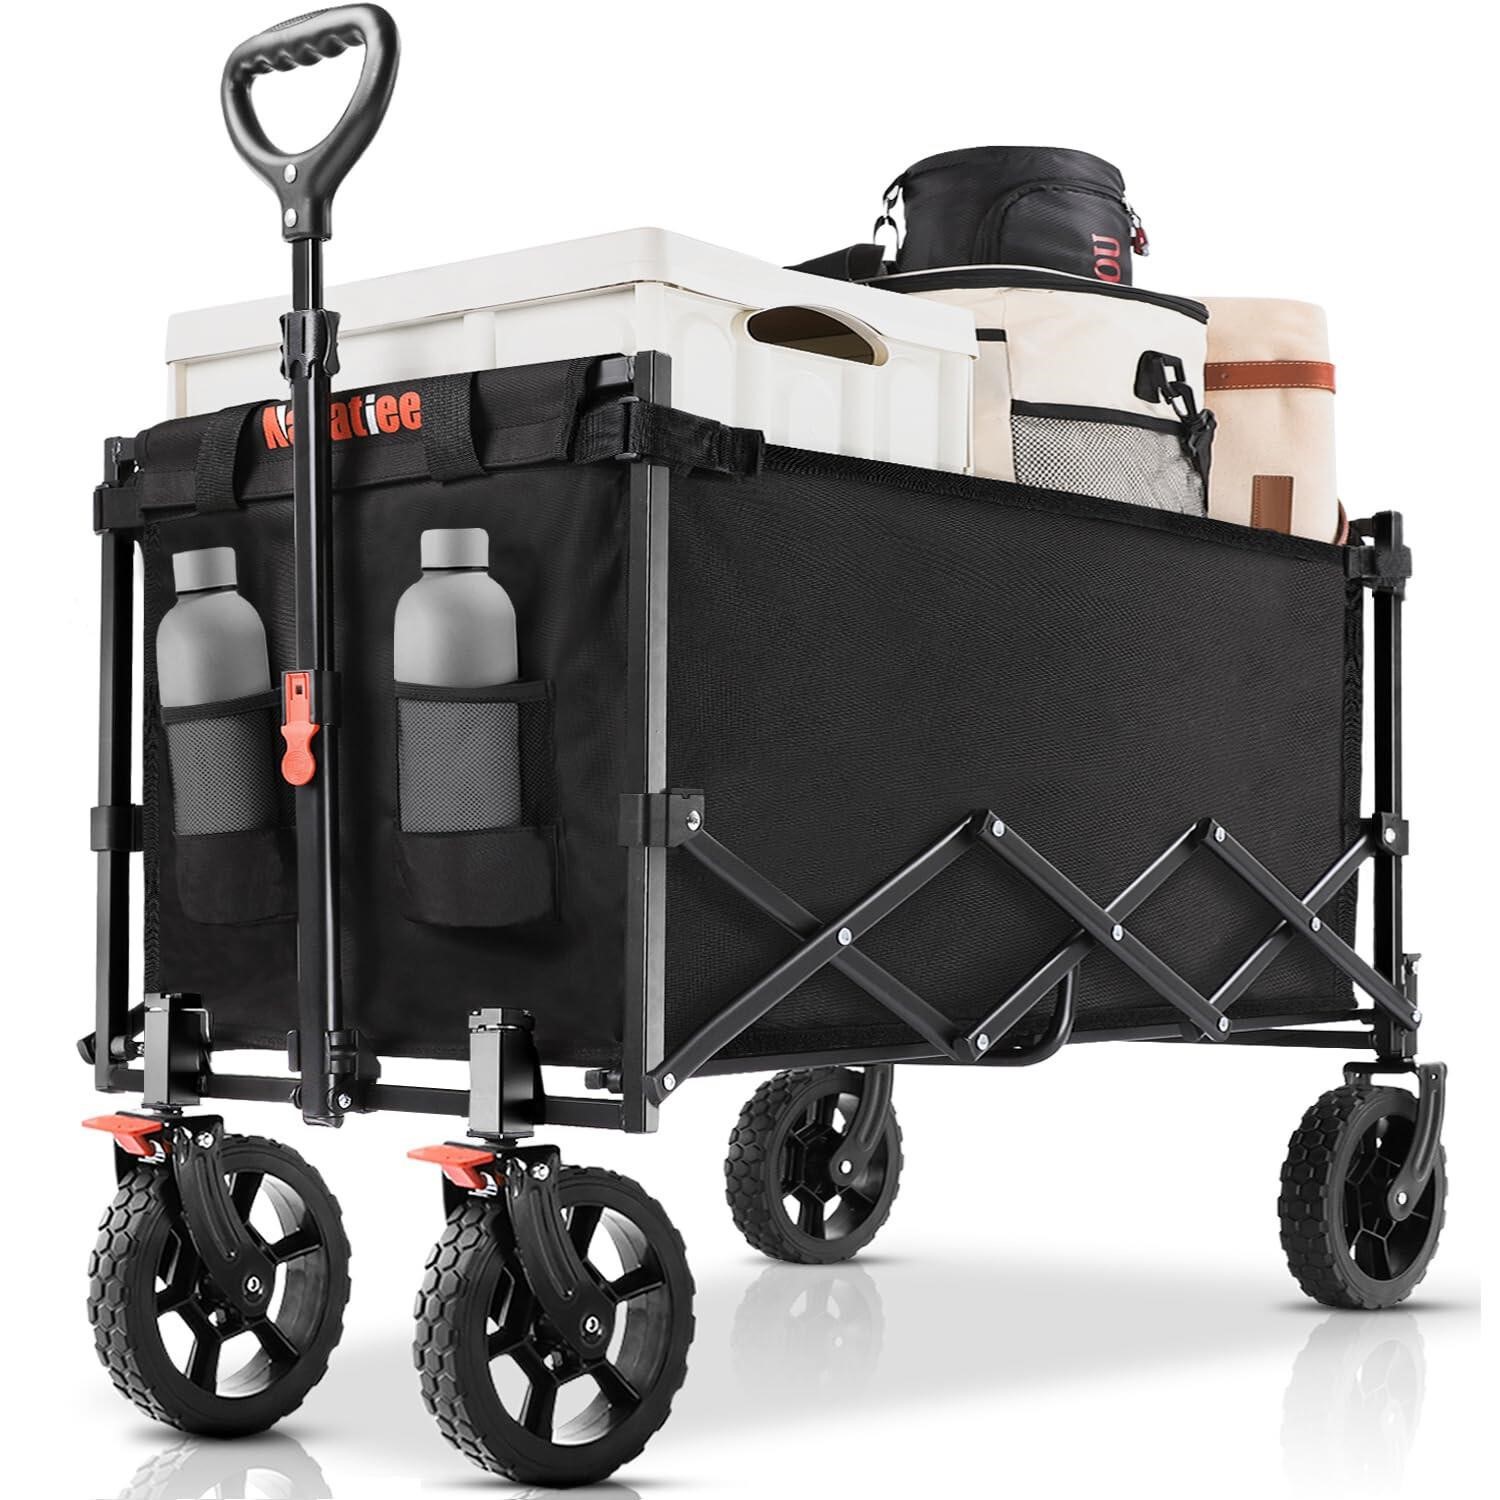 Navatiee Wagon Cart Heavy Duty Foldable, Collapsi